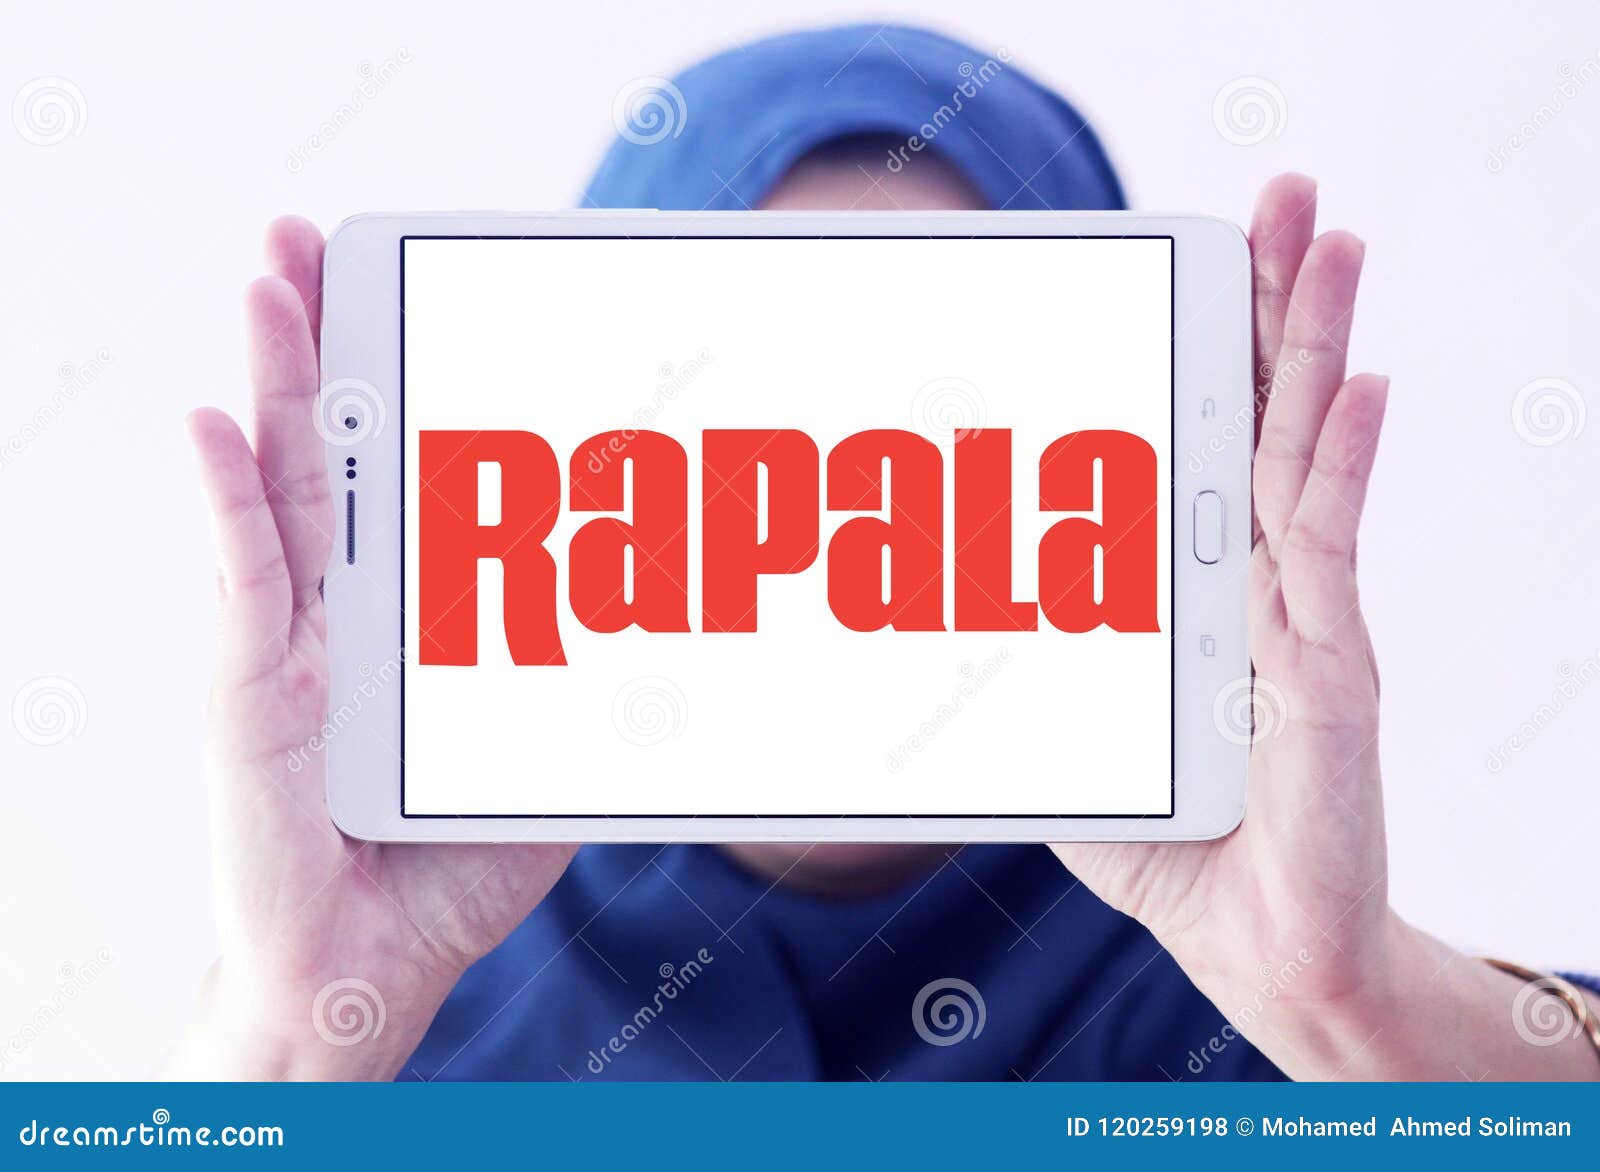 Rapala company logo editorial stock photo. Image of fishing - 120259198